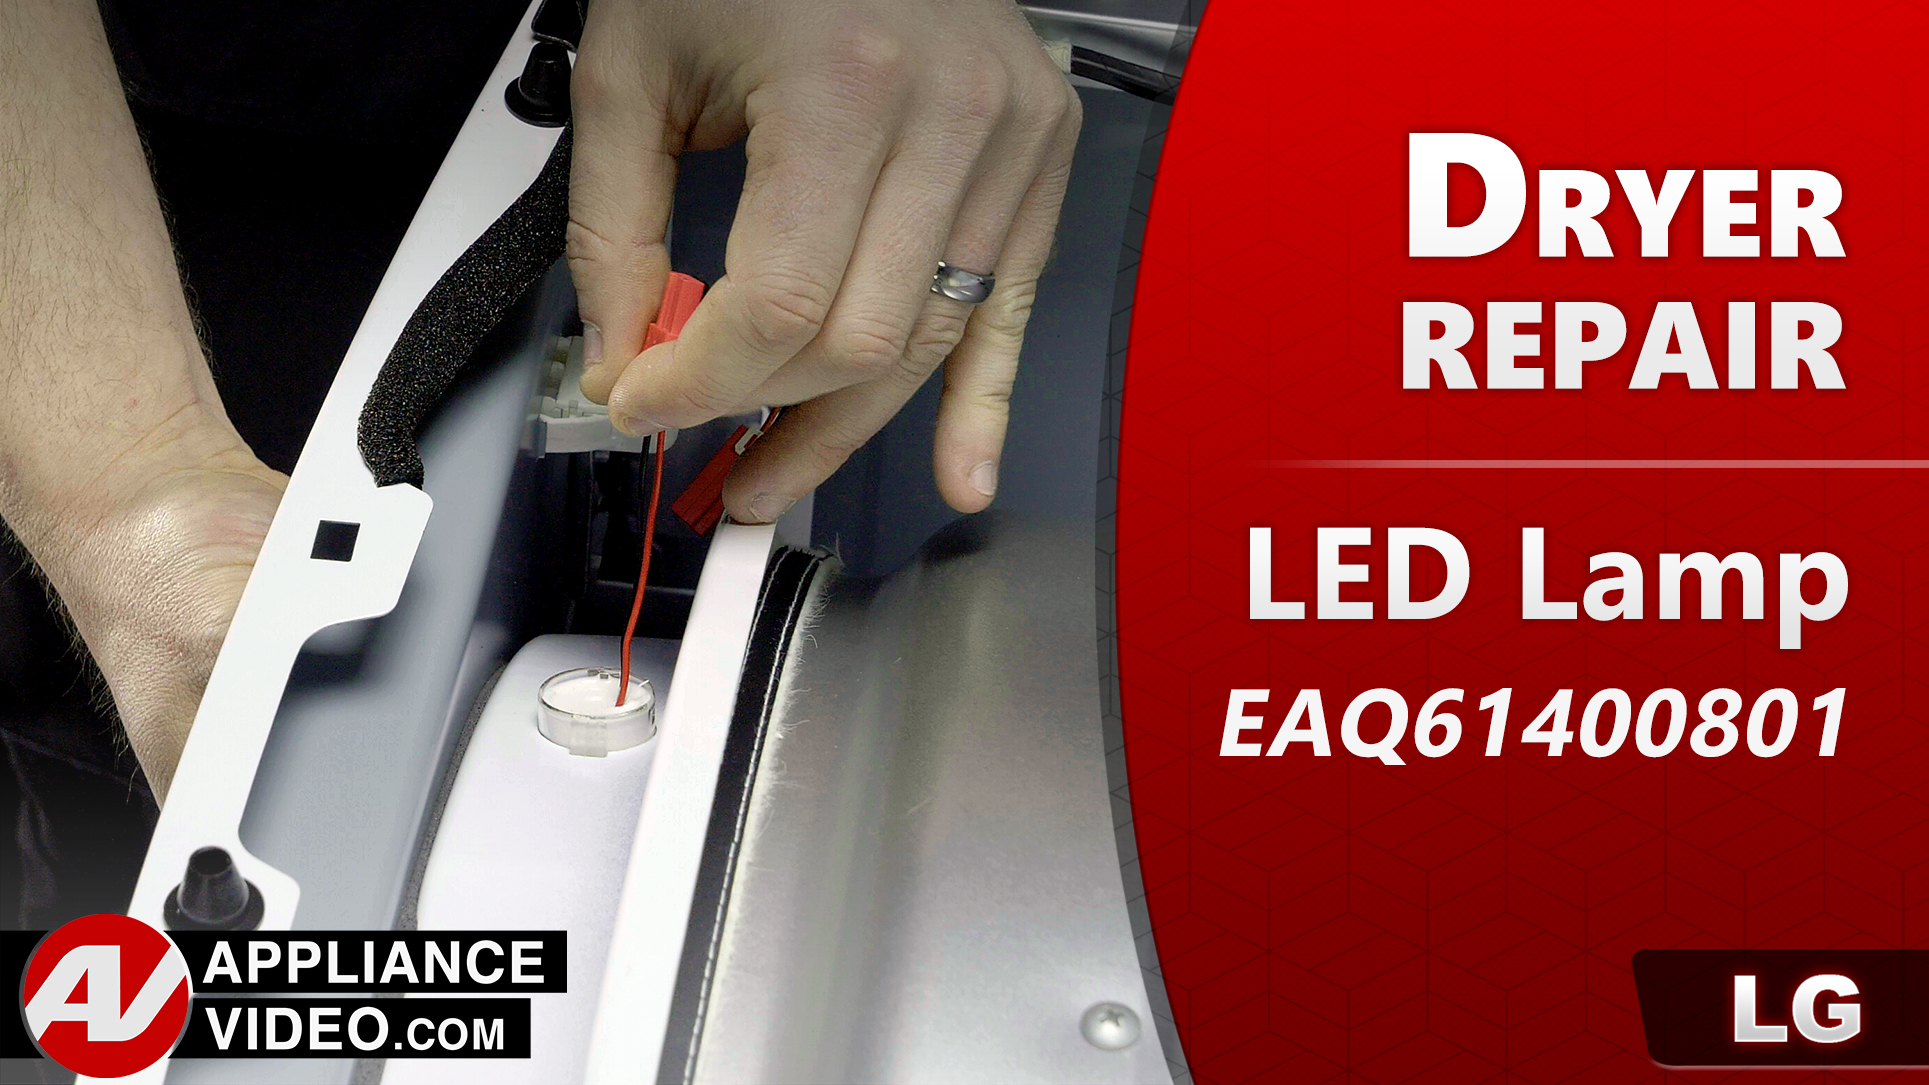 LG DLG7301WE Dryer – Lanp will not illuminate – LED Lamp